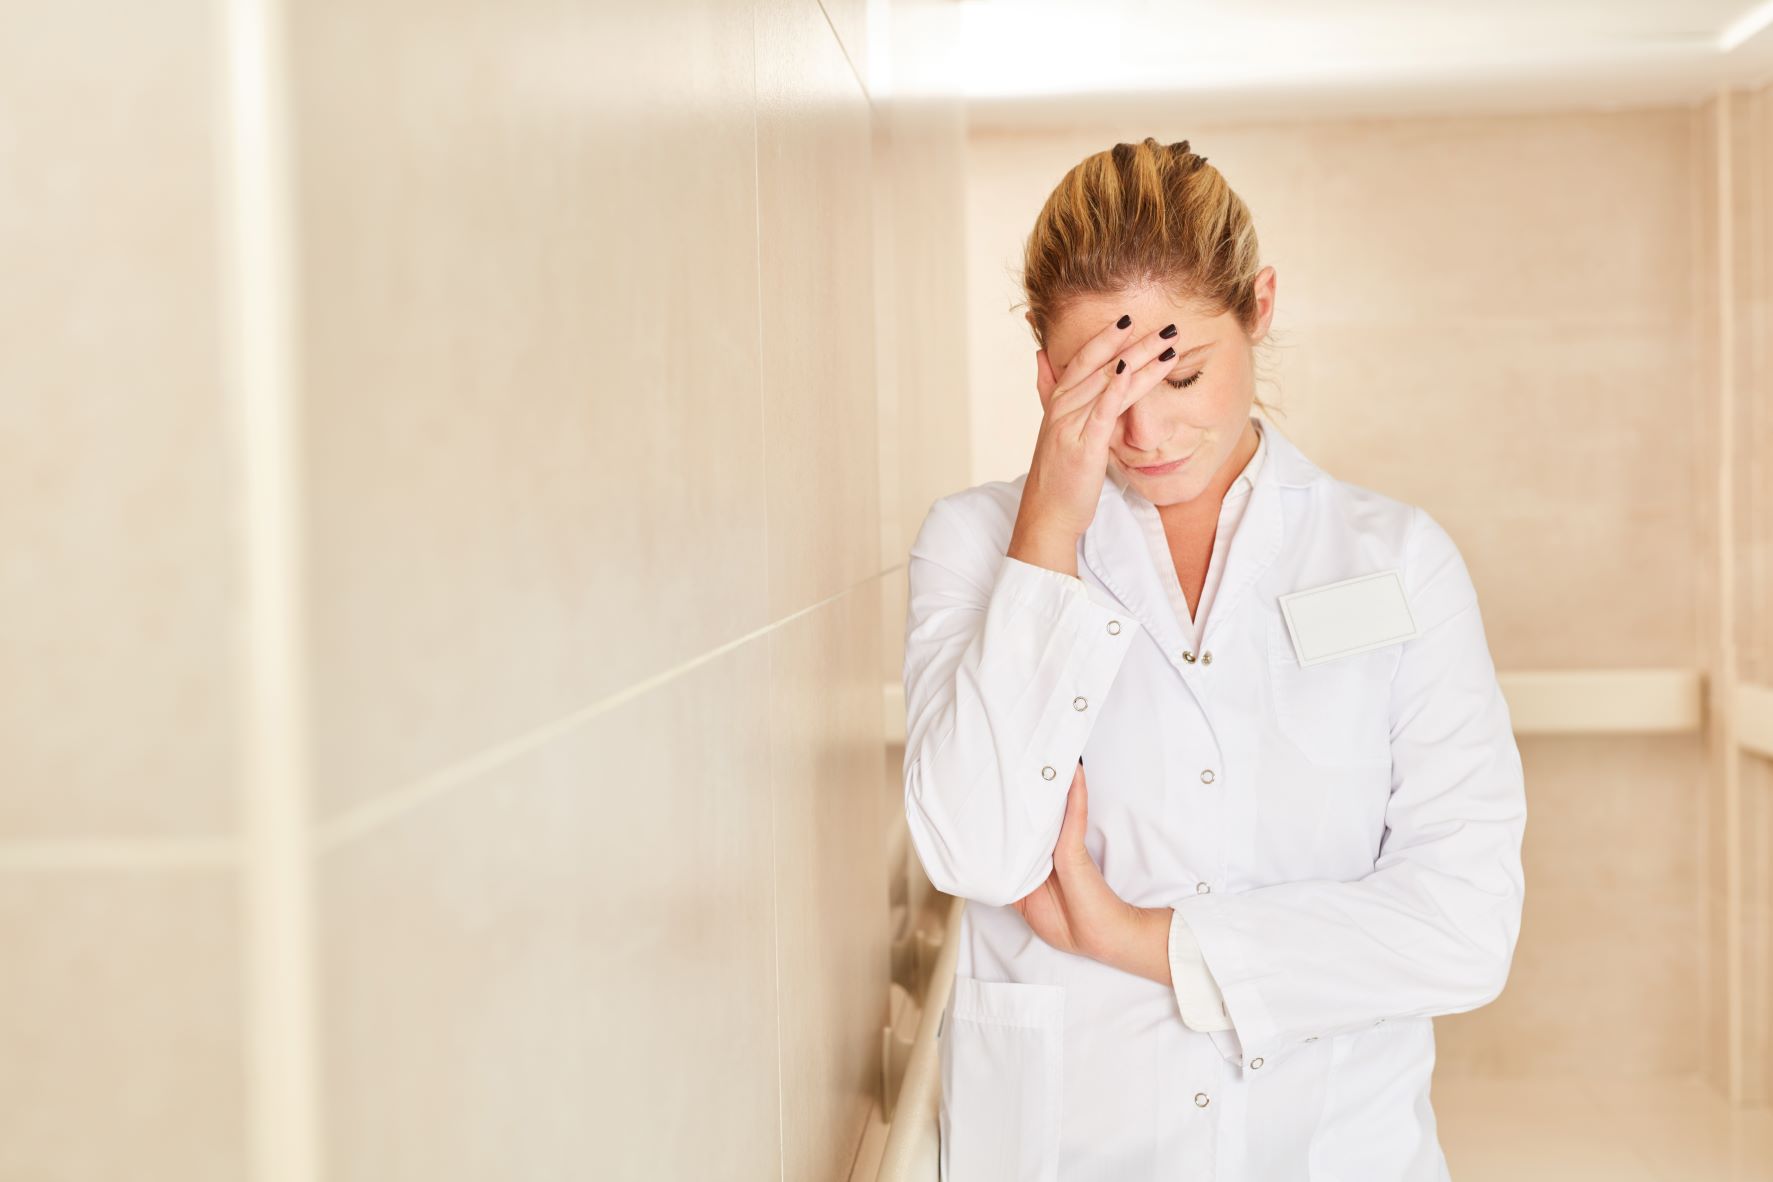 What is Caregiver Burnout?